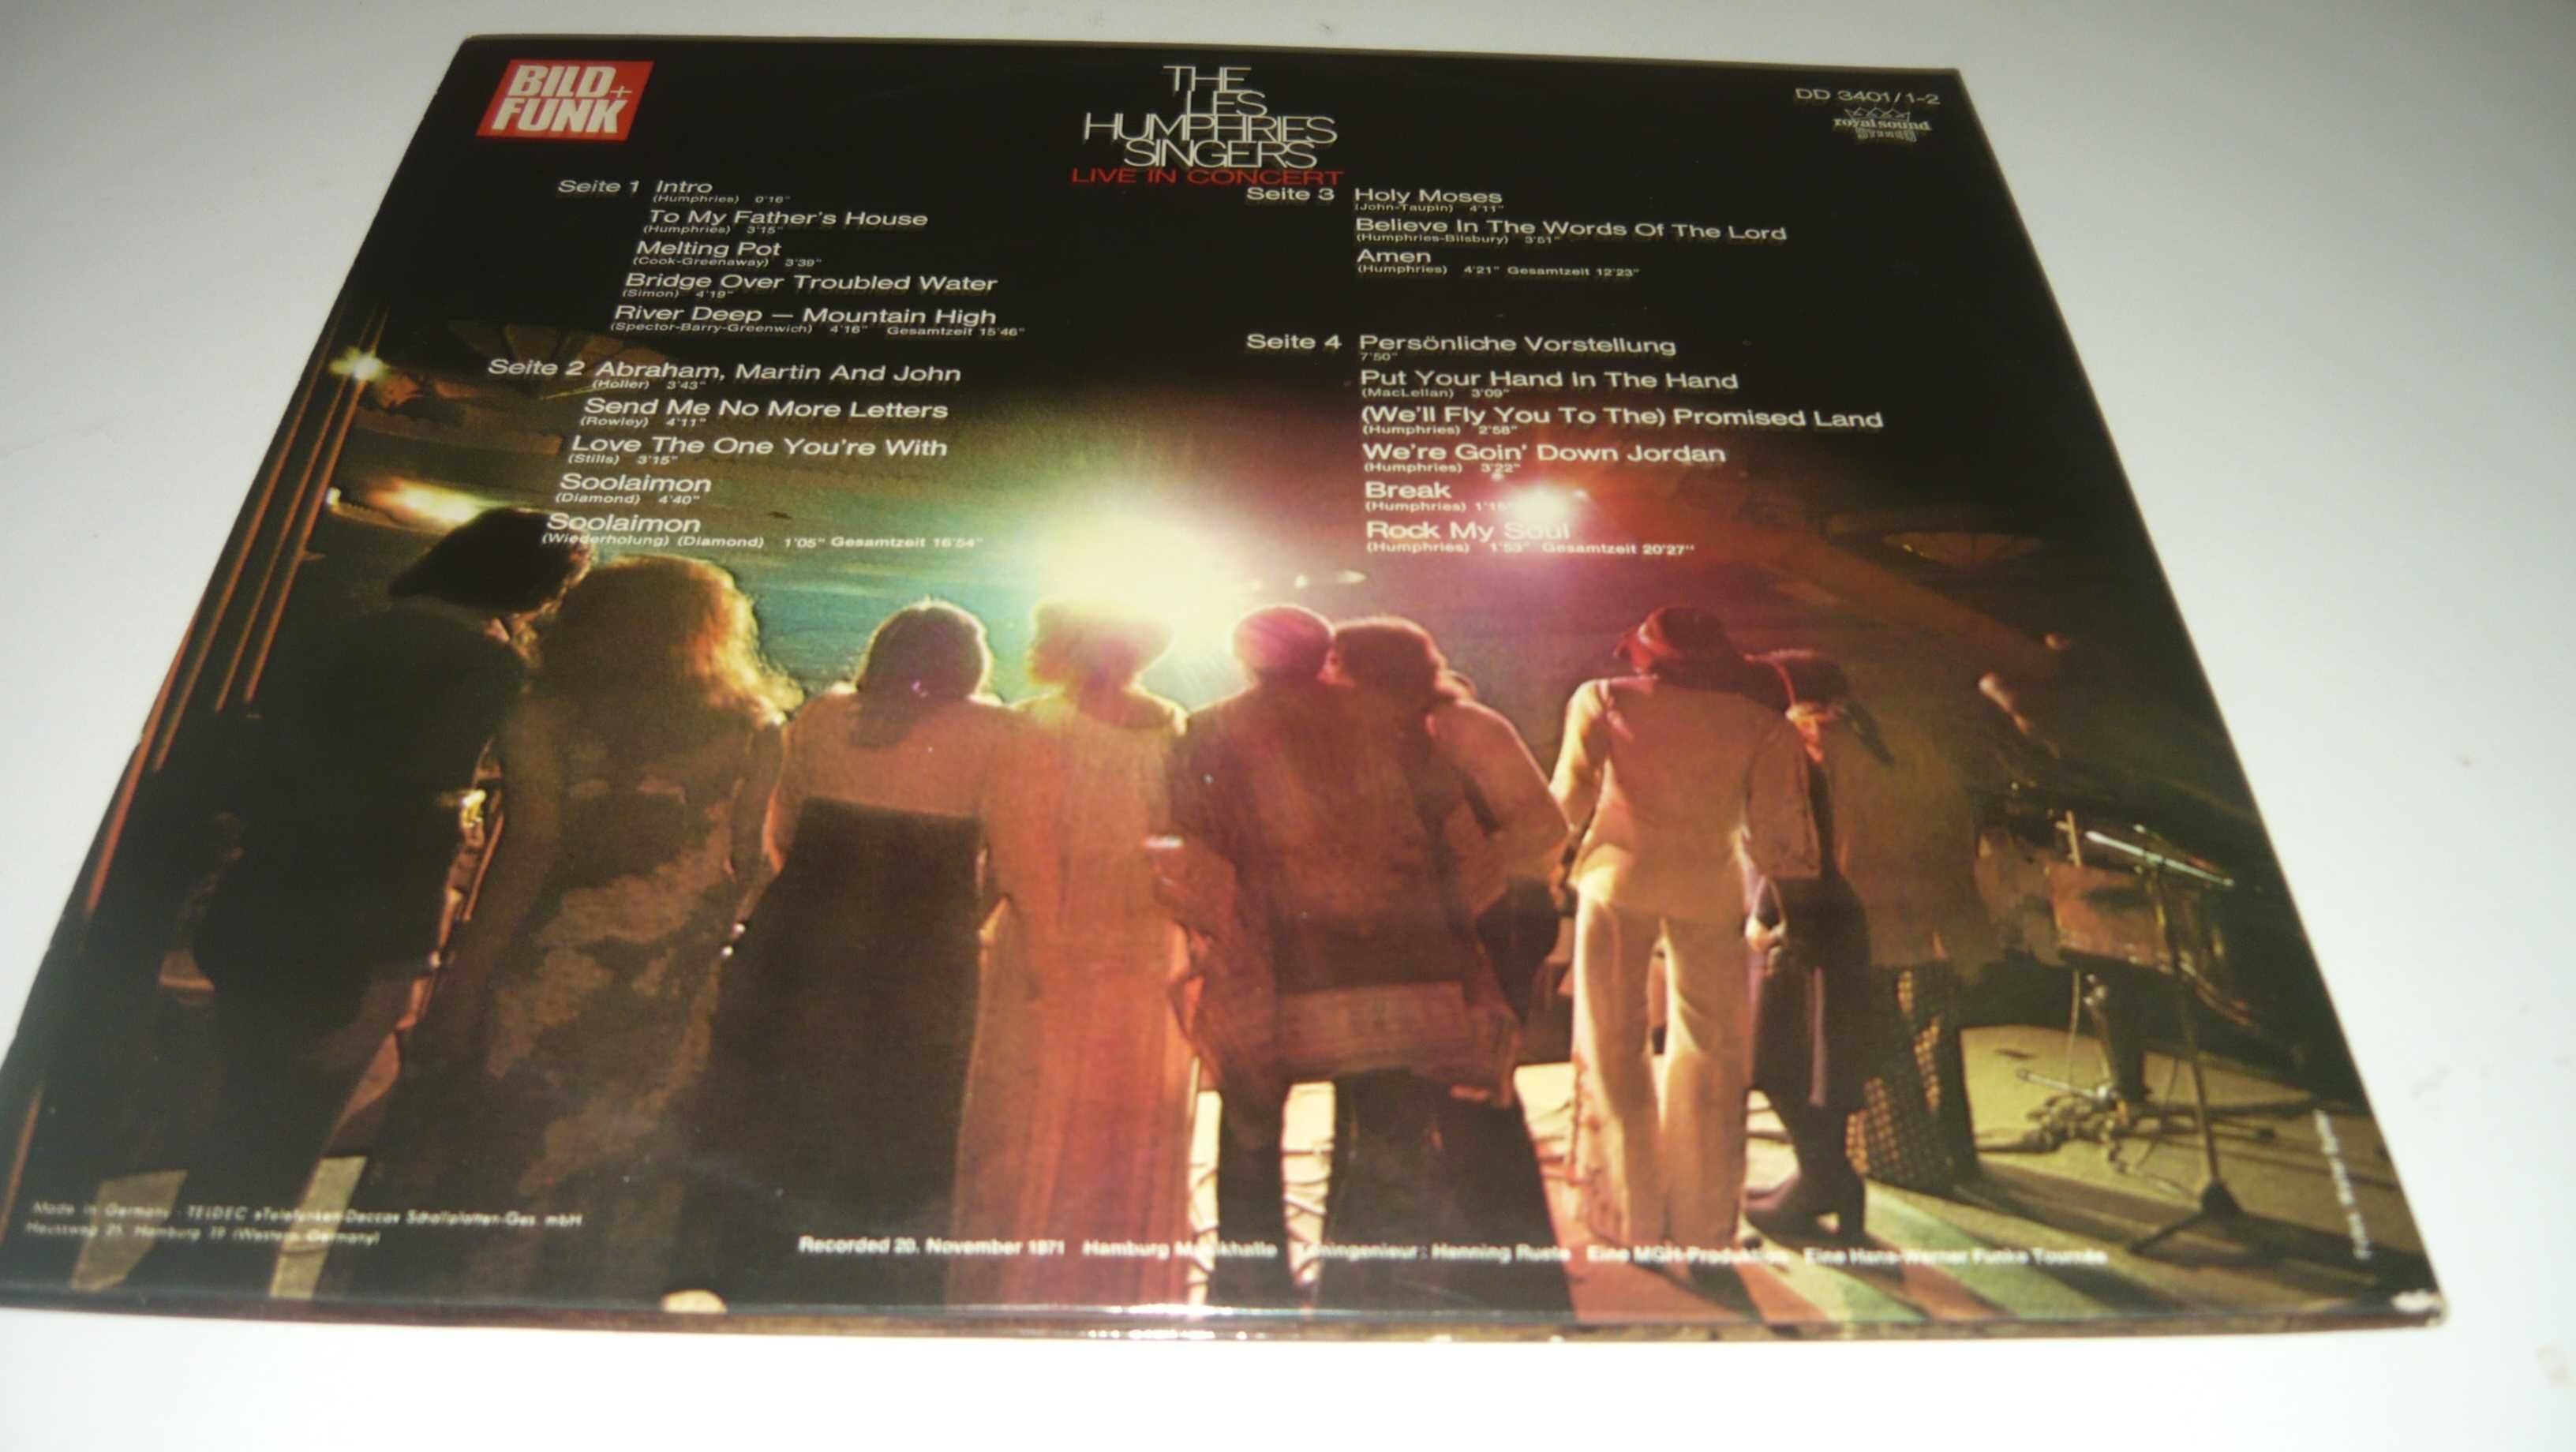 The Les Humphries Singers Live in Concert 2 LP